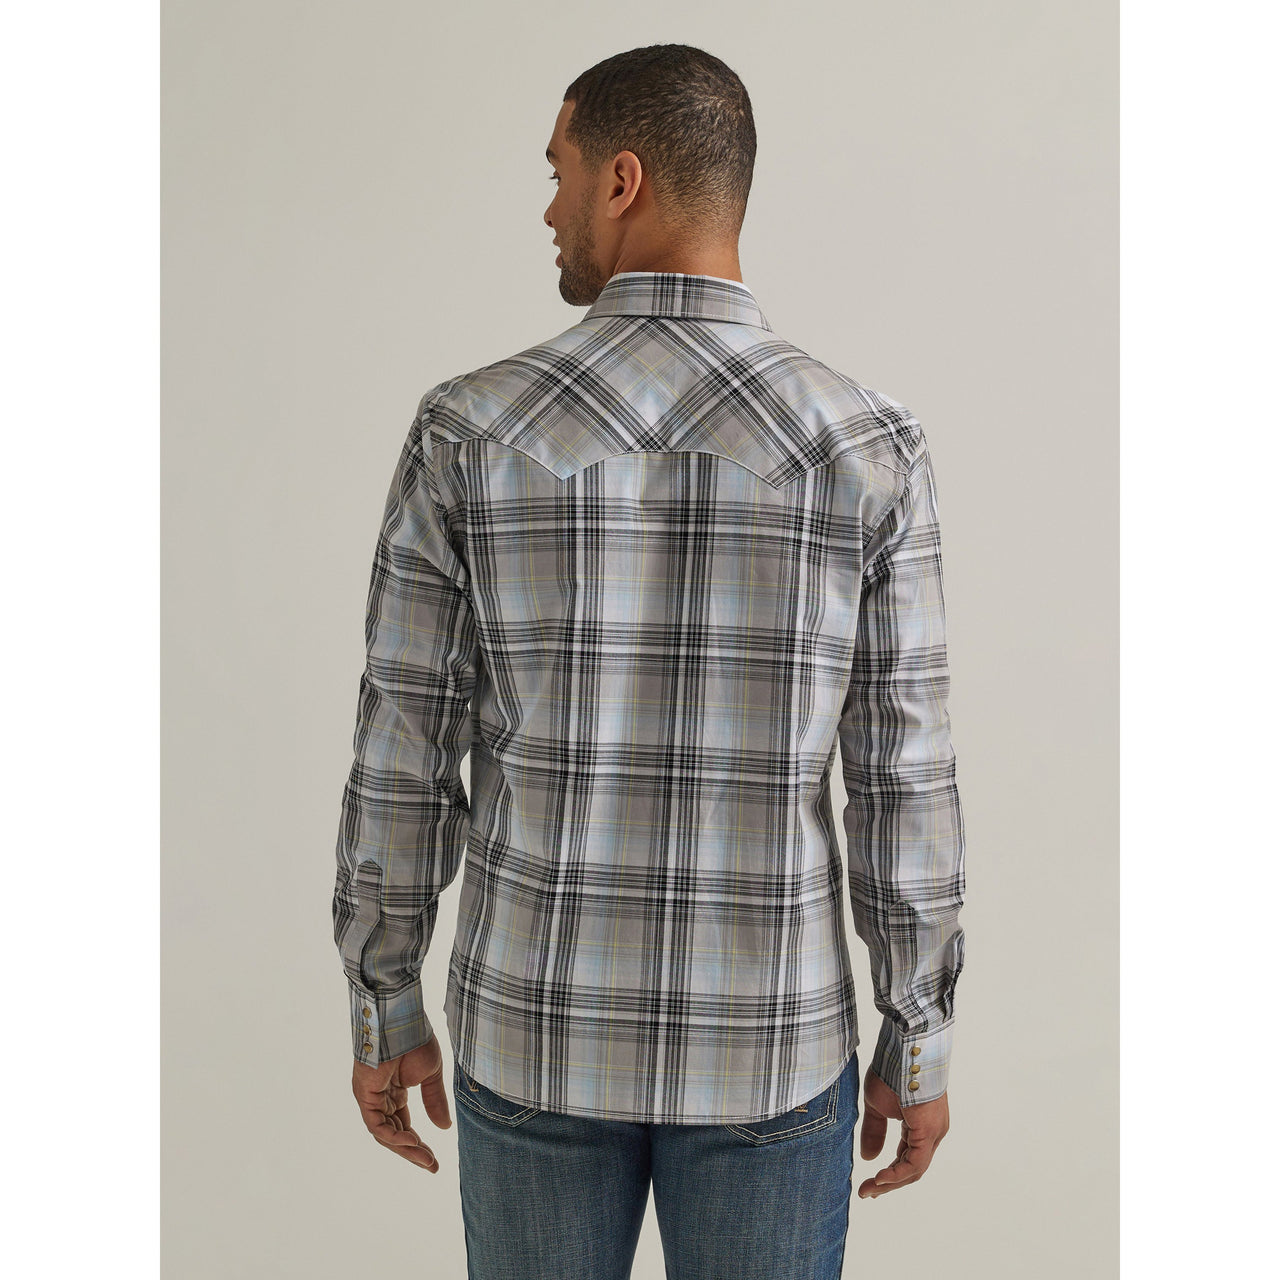 Wrangler Men's Retro Core Long Sleeve Plaid Shirt - Grey